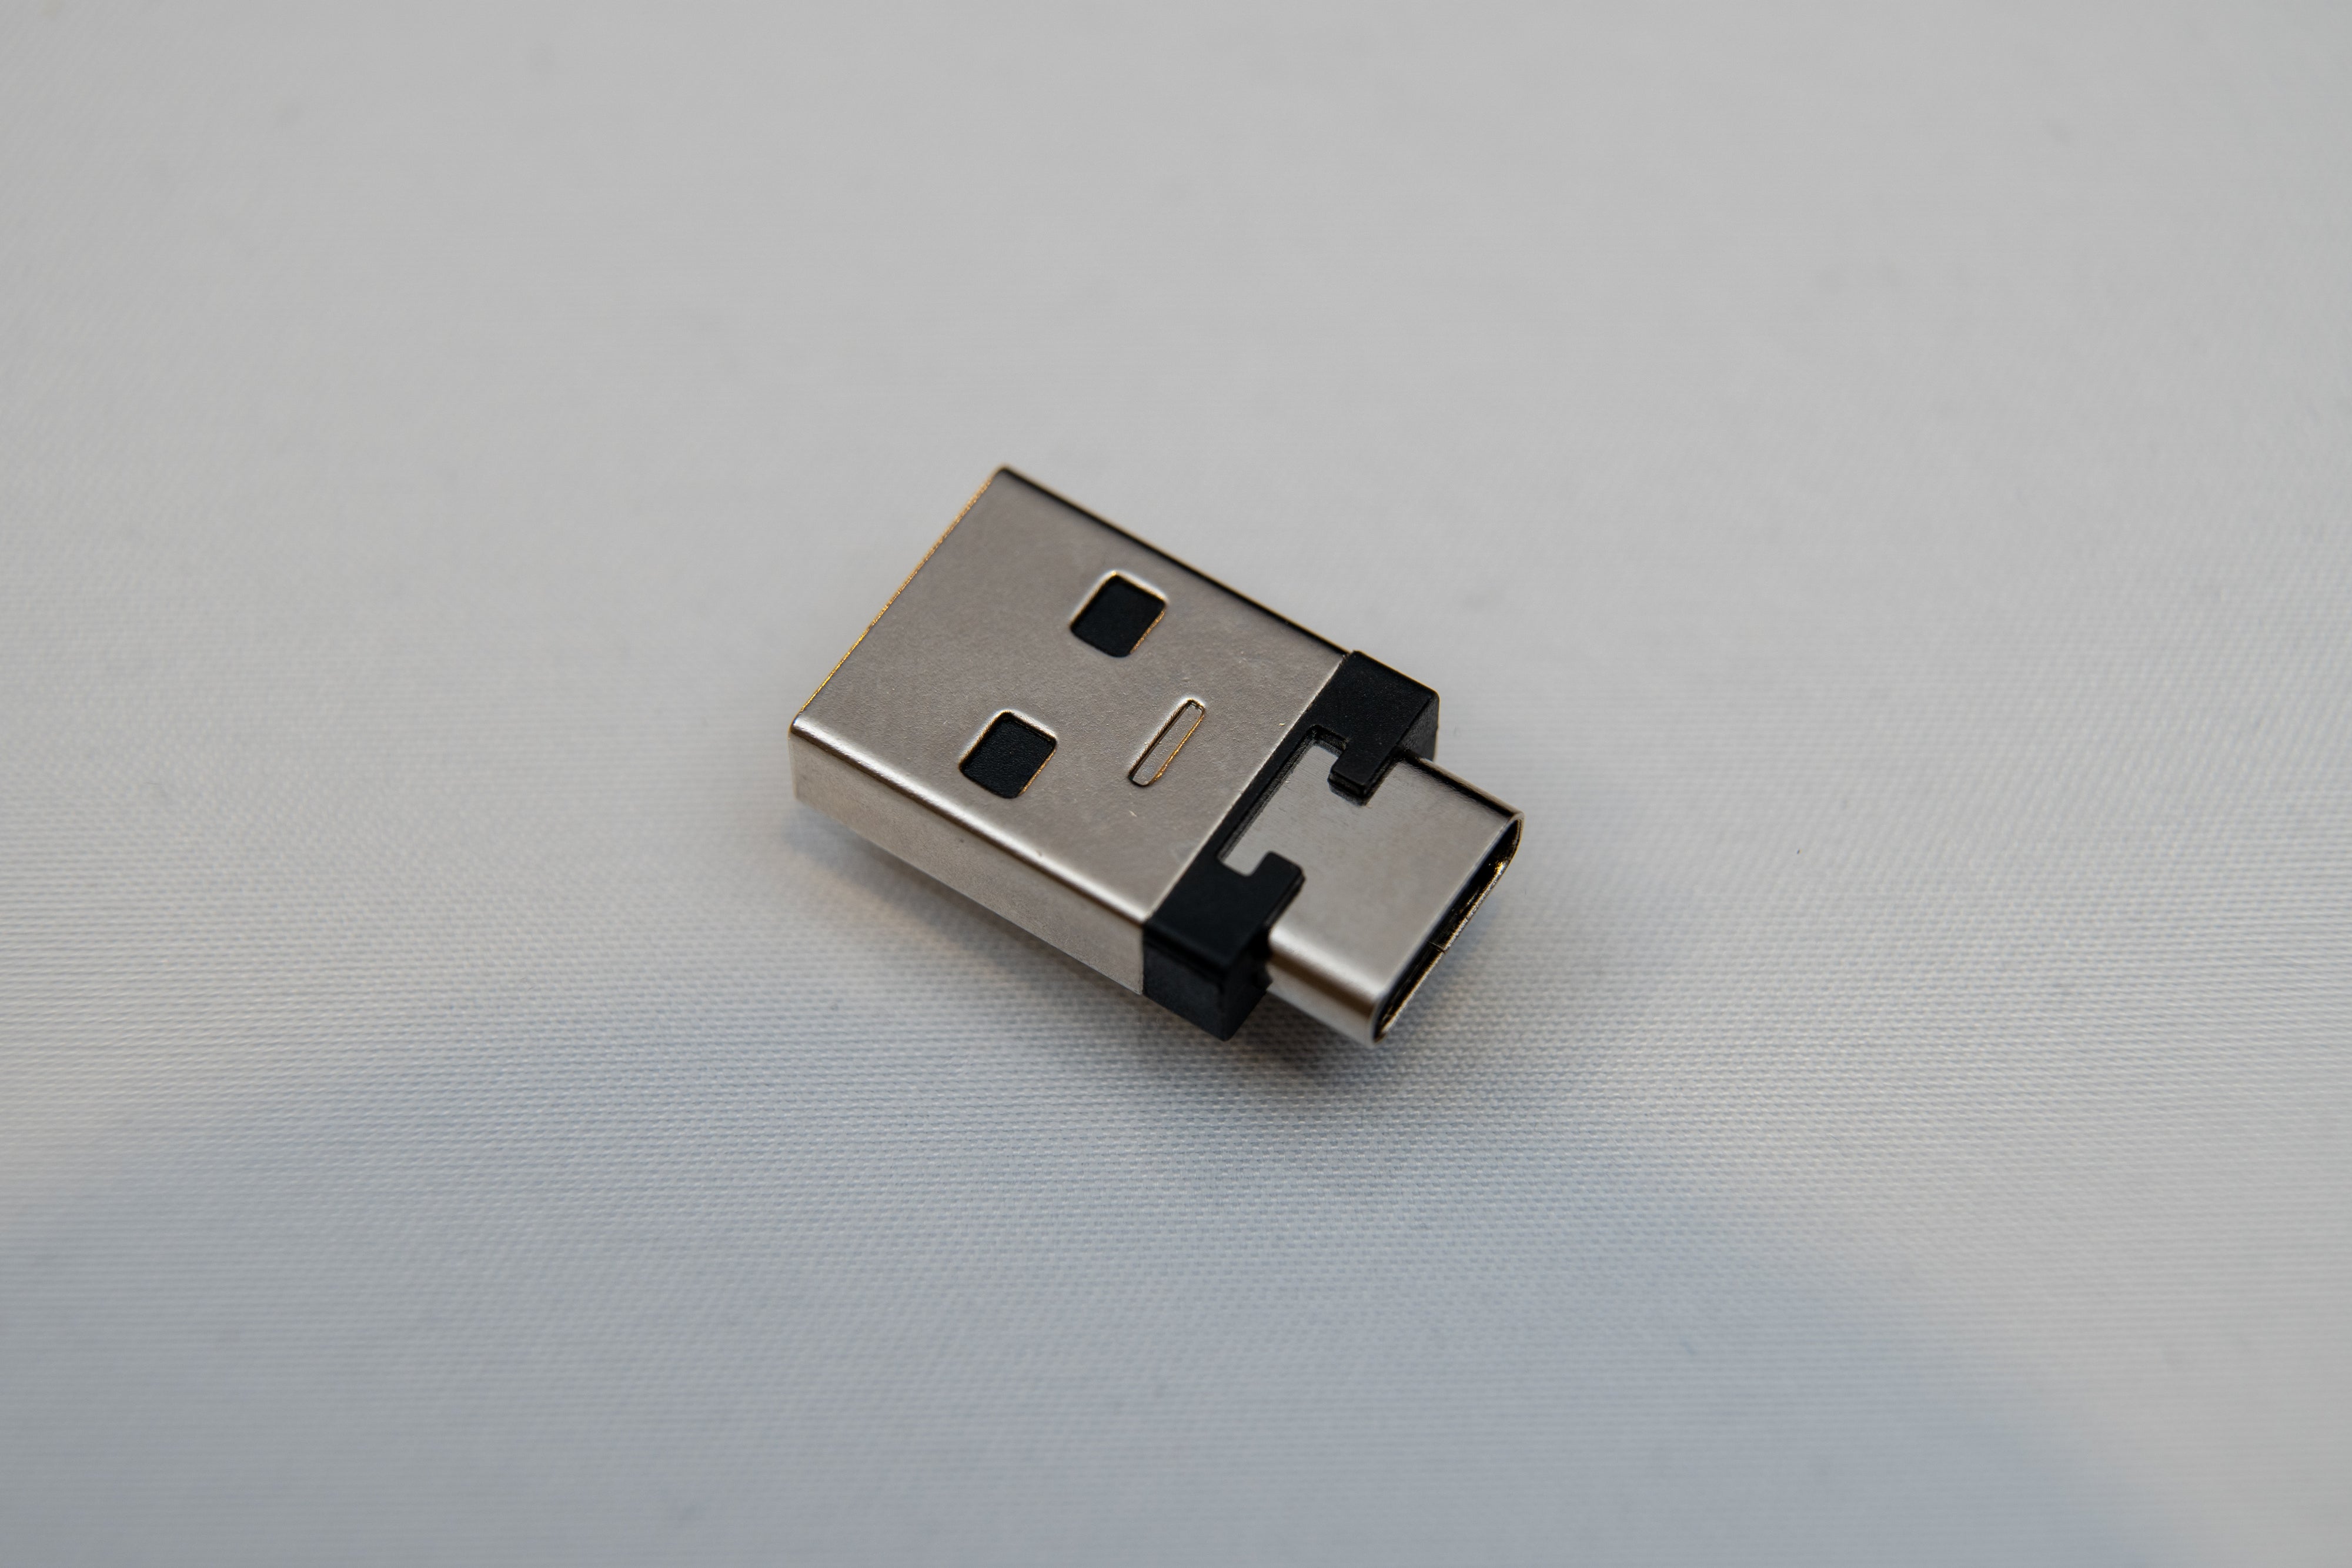 Split keyboard USB-C cable kit